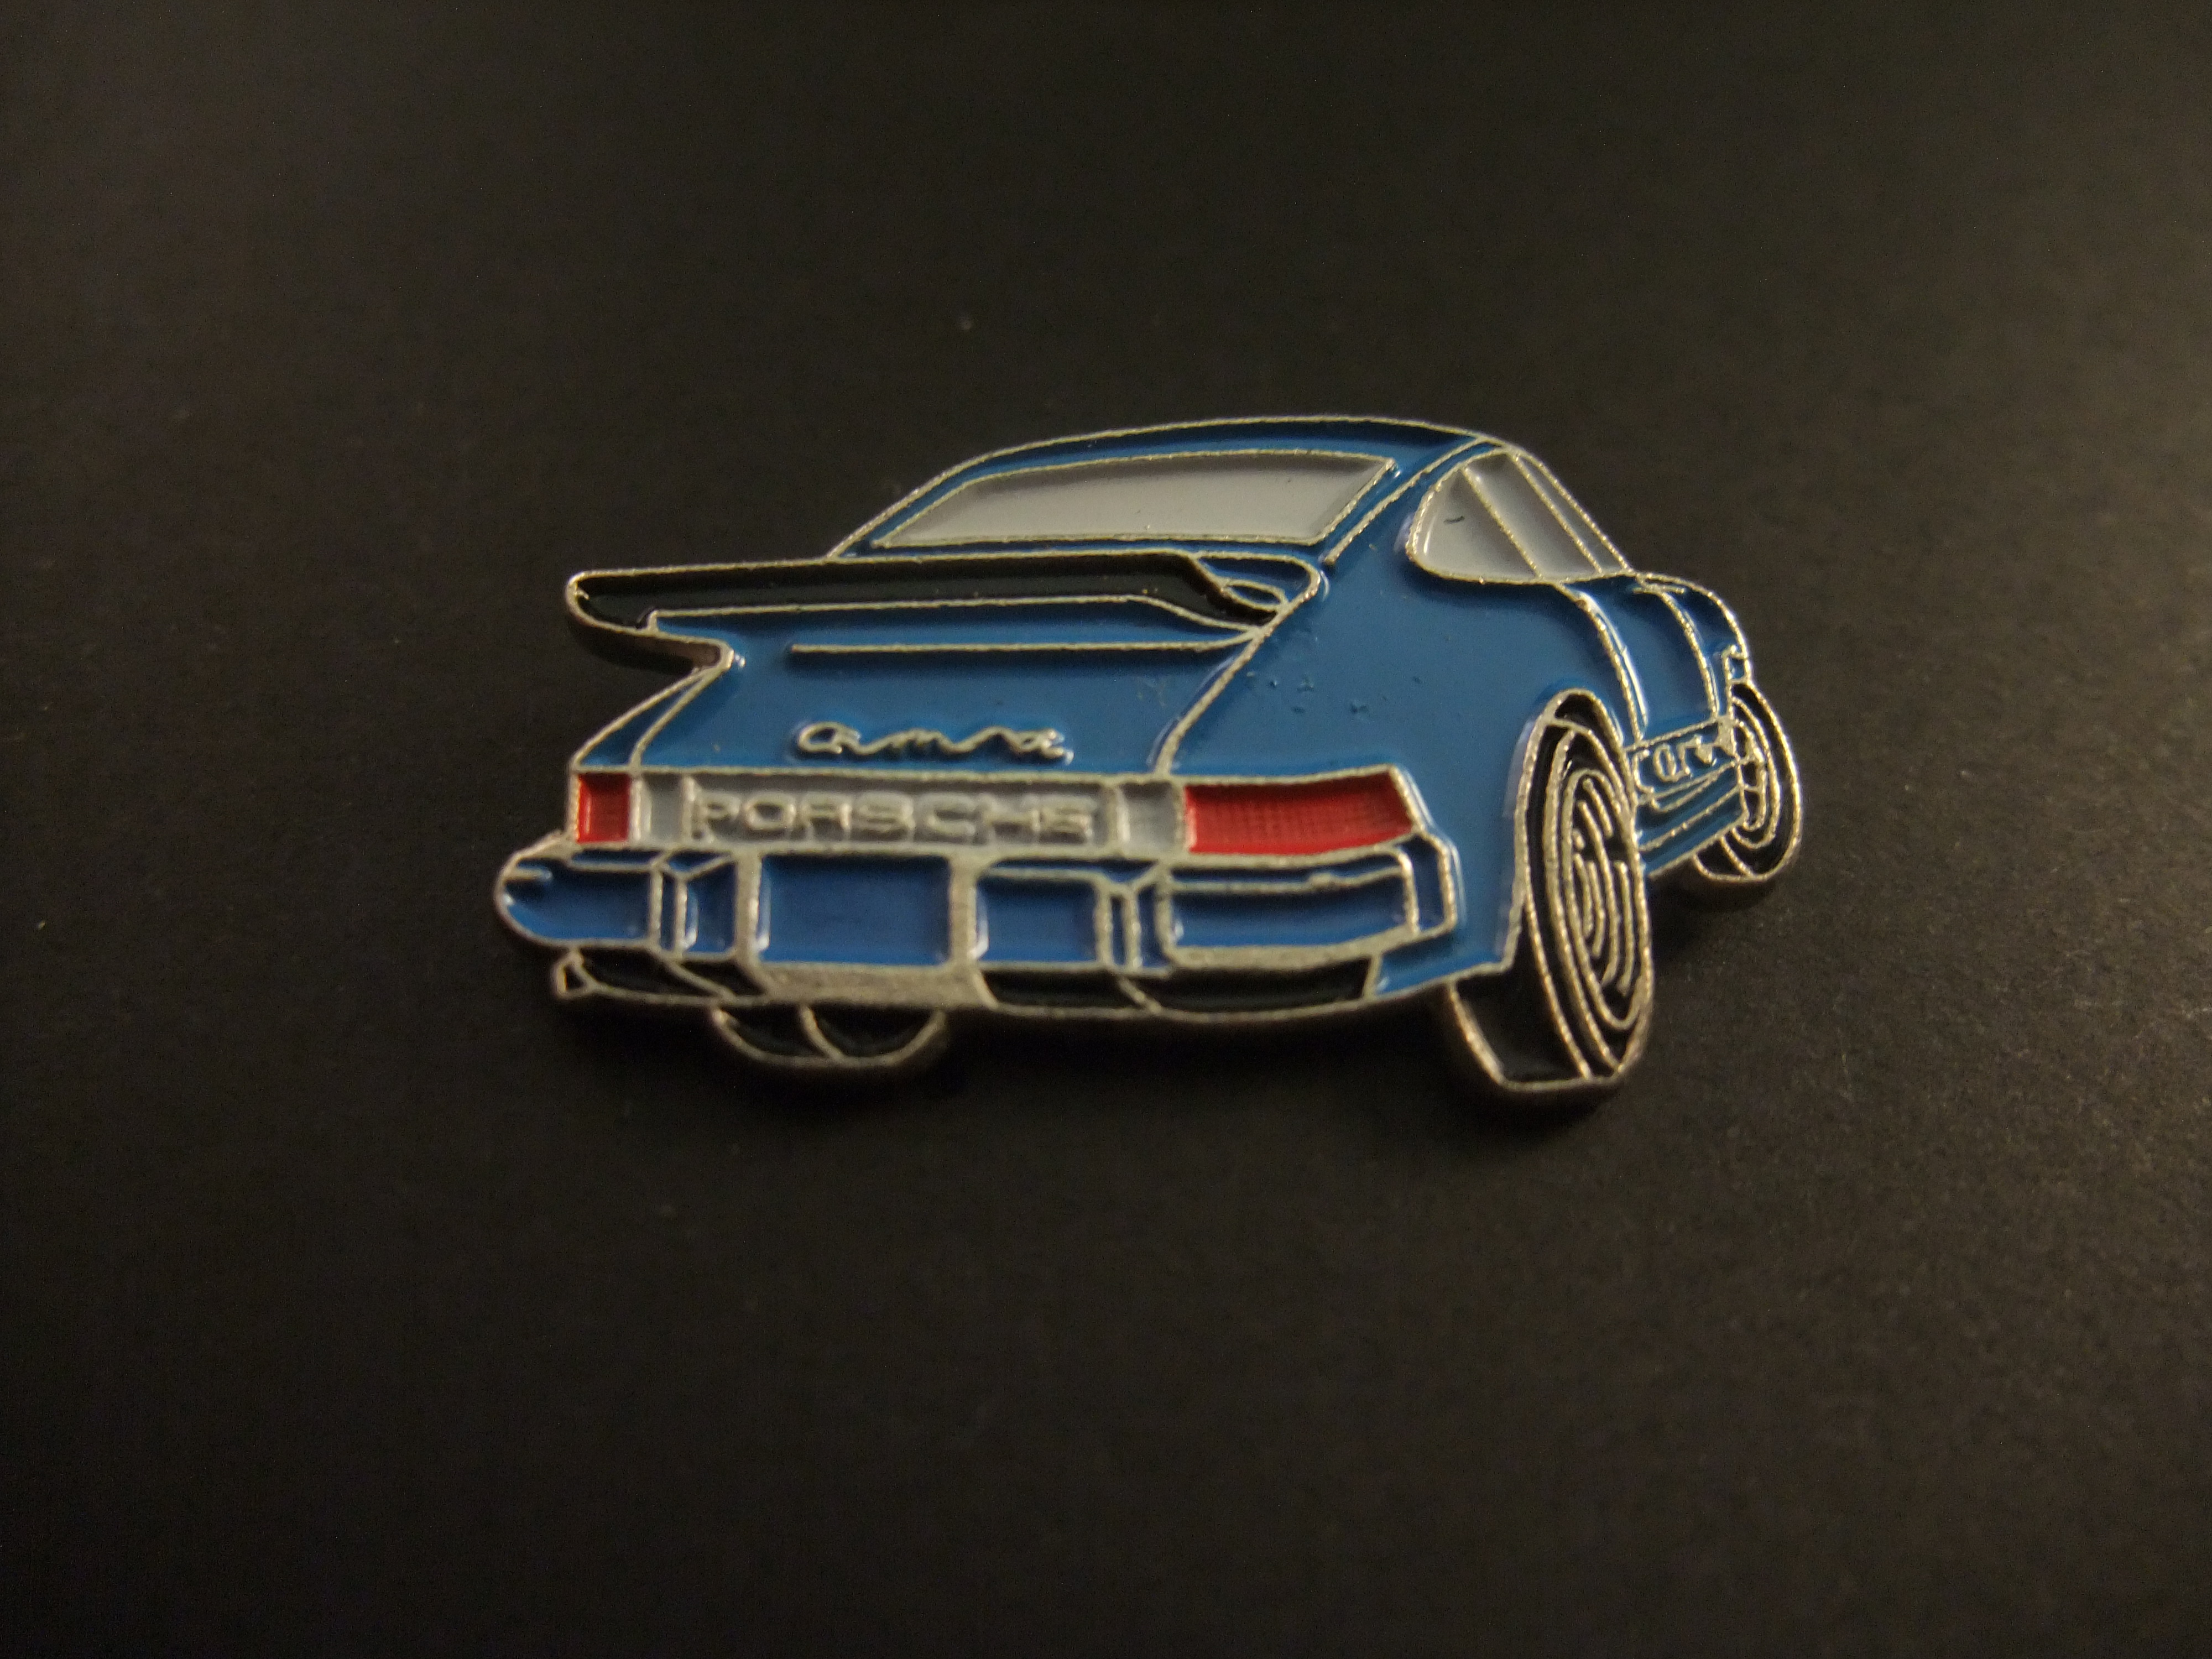 Porsche Carrera blauwe sportwagen